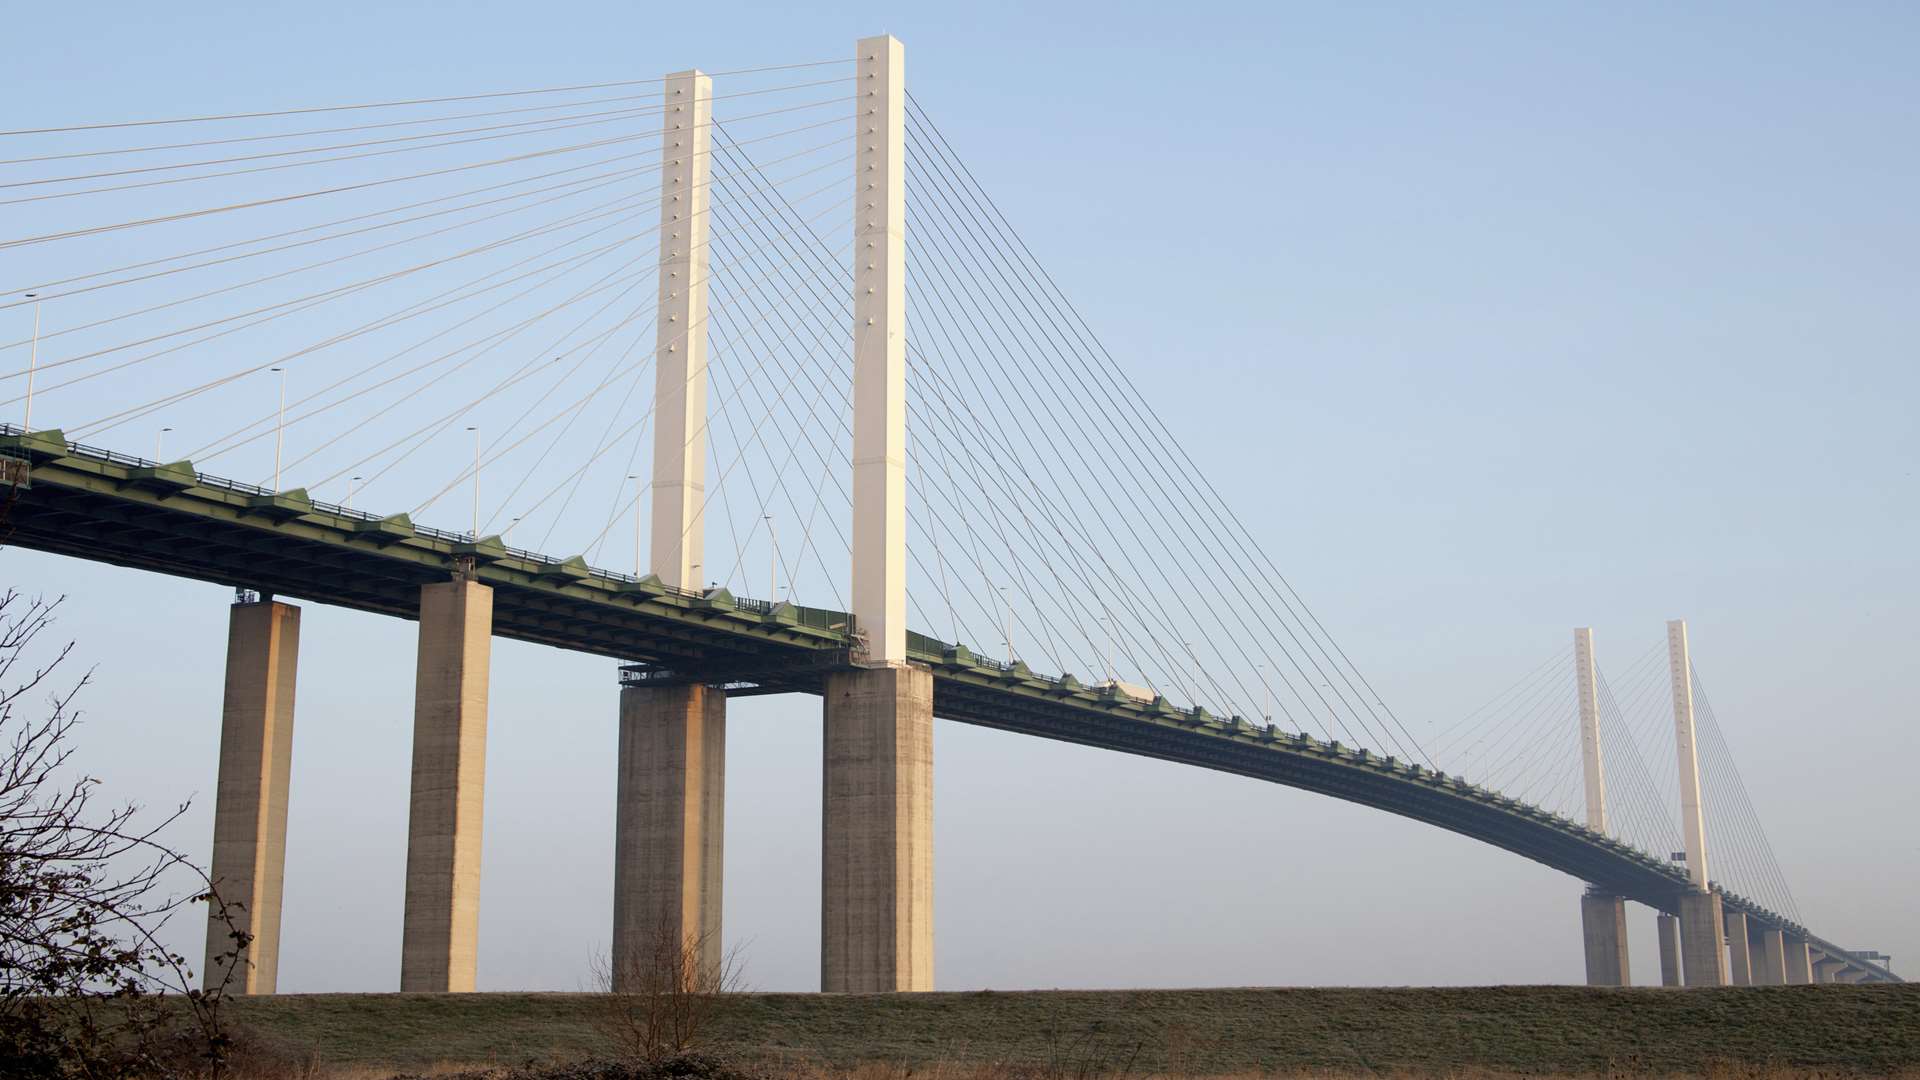 The QEII Bridge